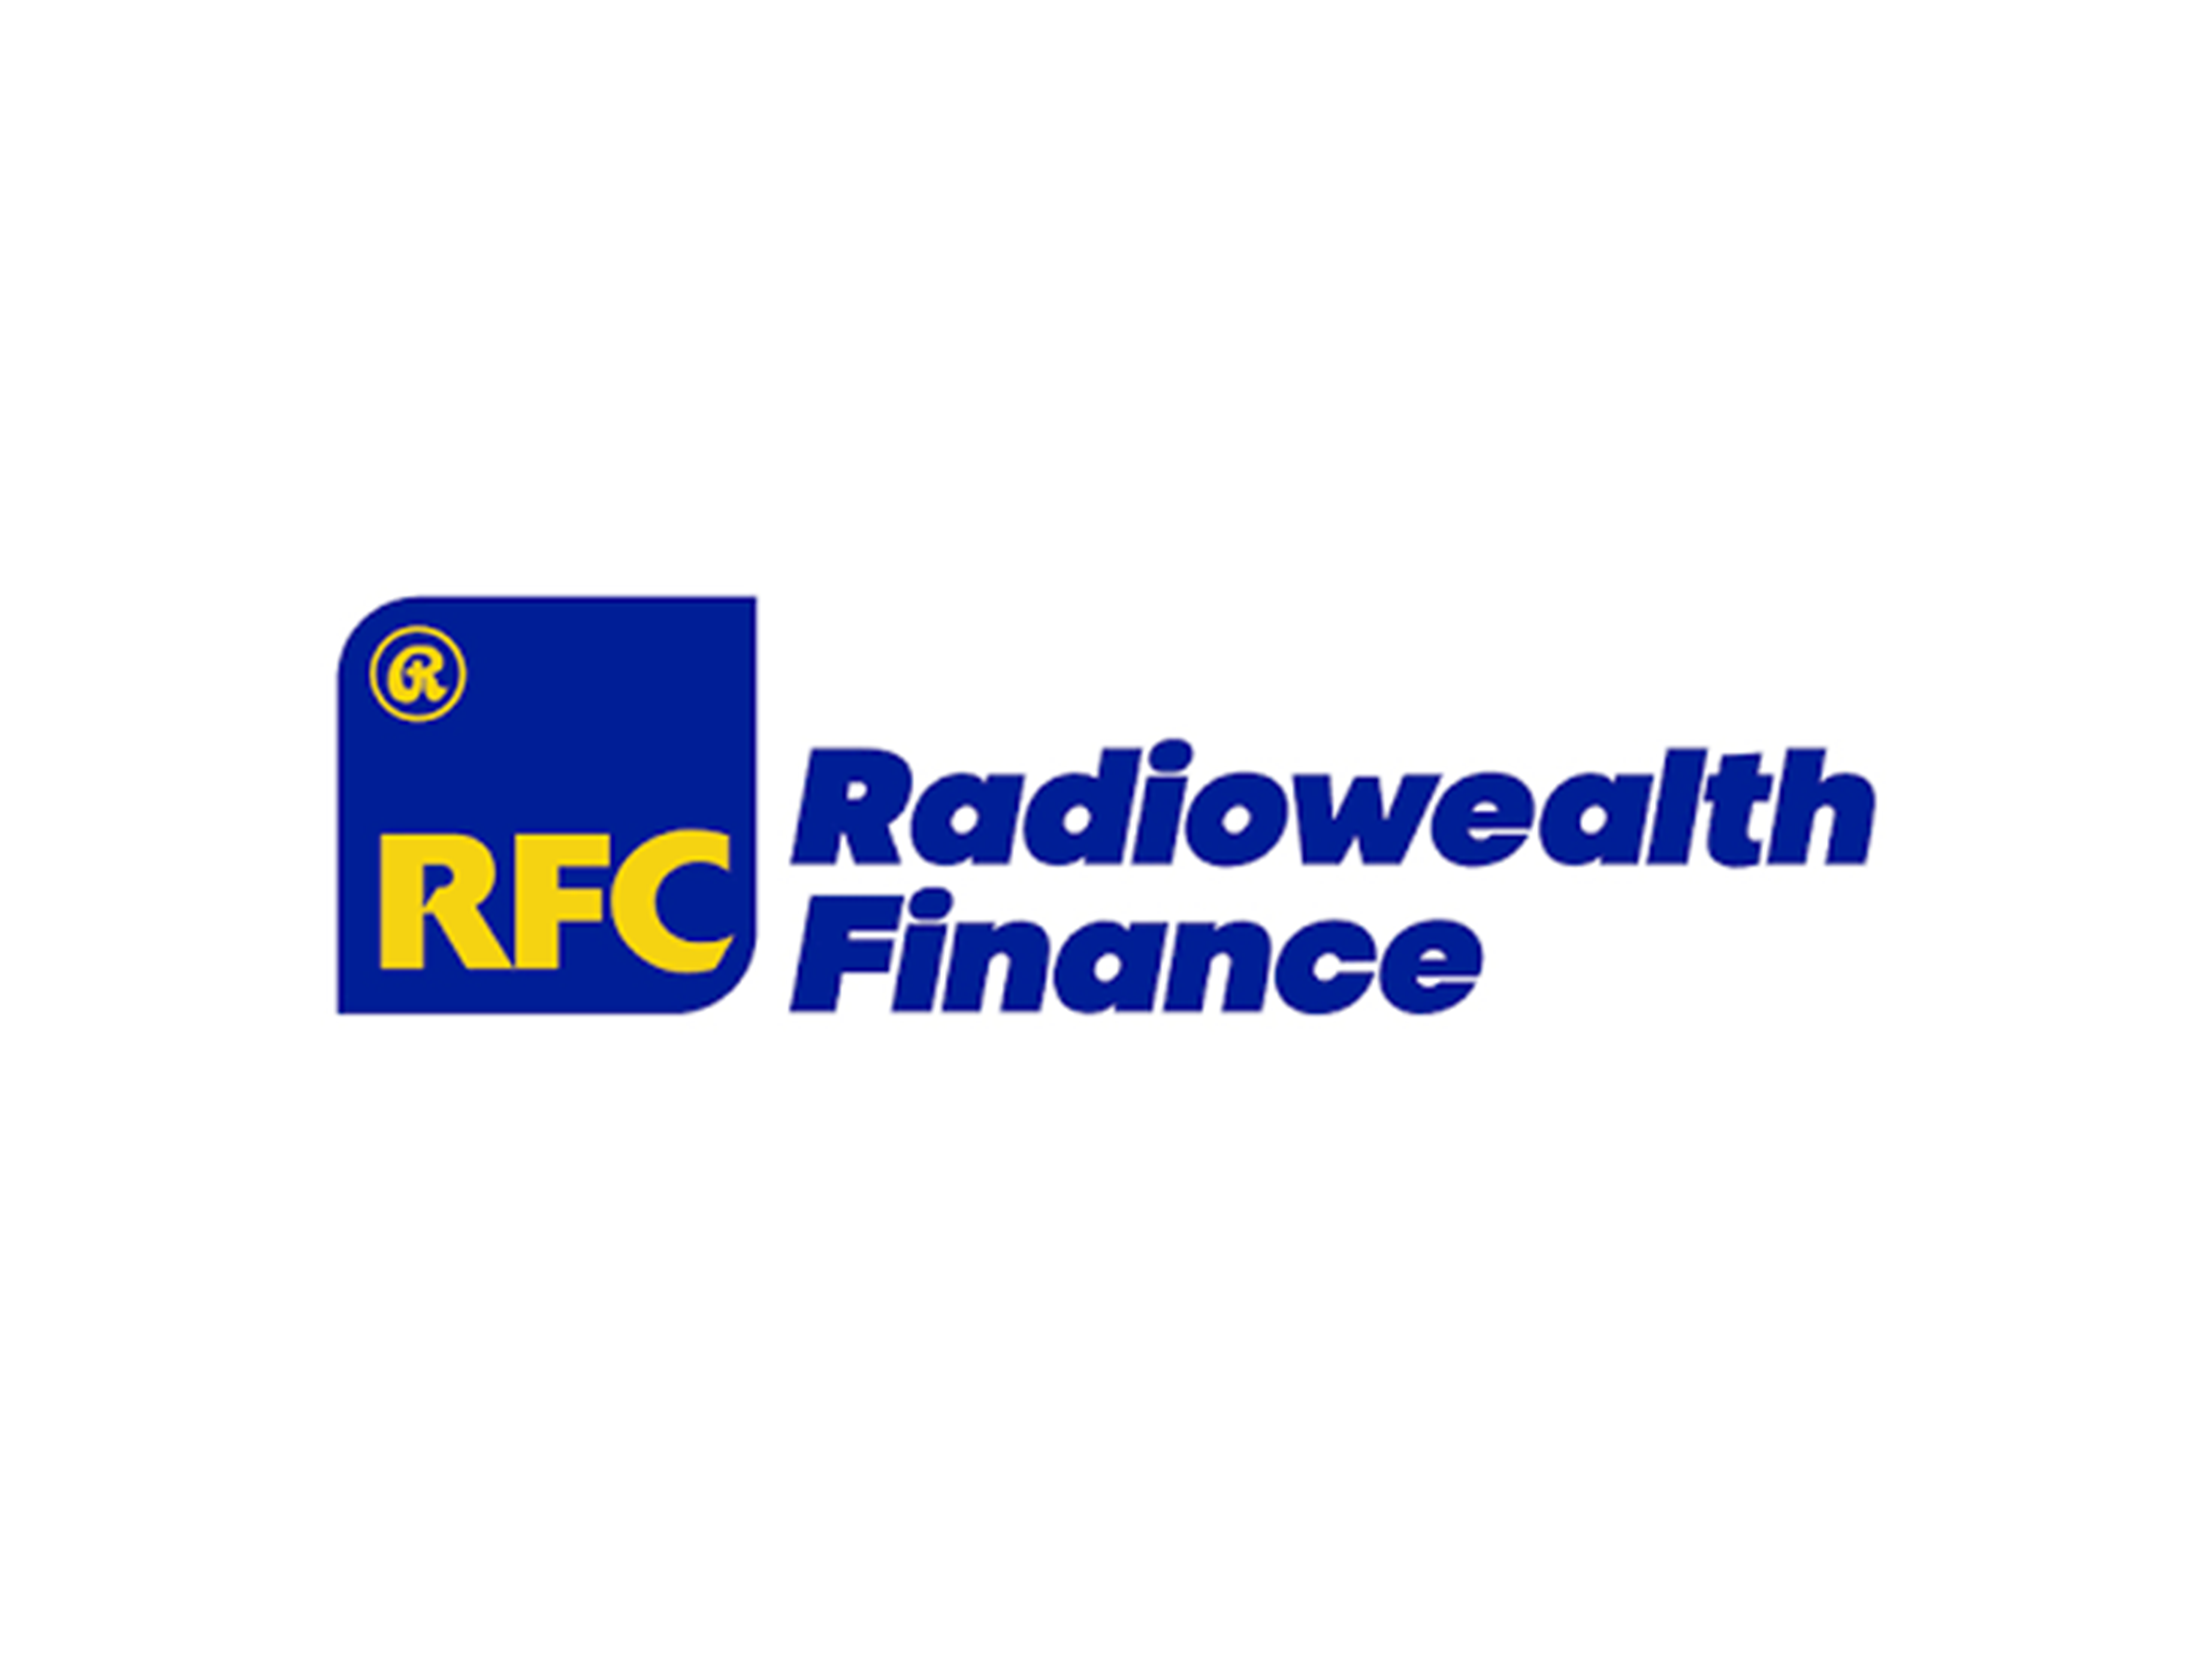 Radiowealth Finance Logo